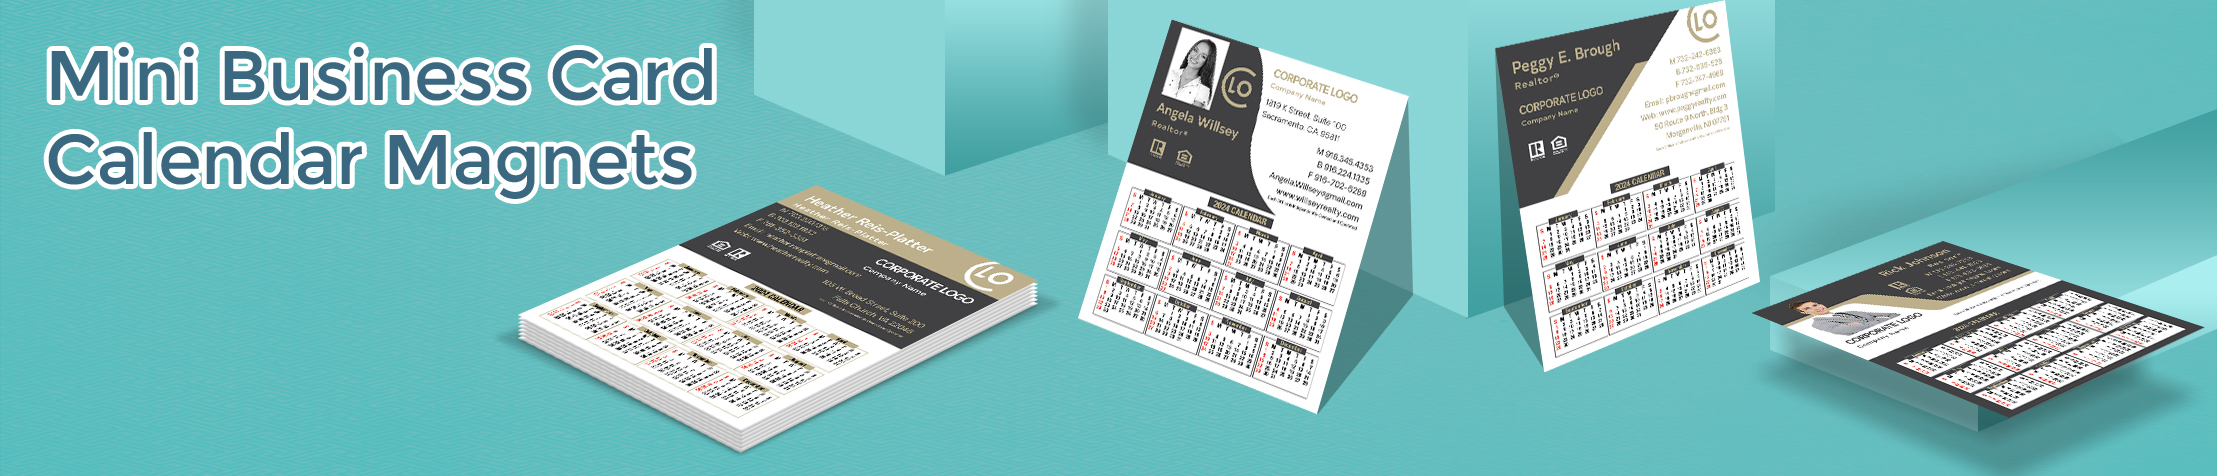 Century 21 Real Estate Mini Business Card Calendar Magnets - Century 21  personalized marketing materials | BestPrintBuy.com